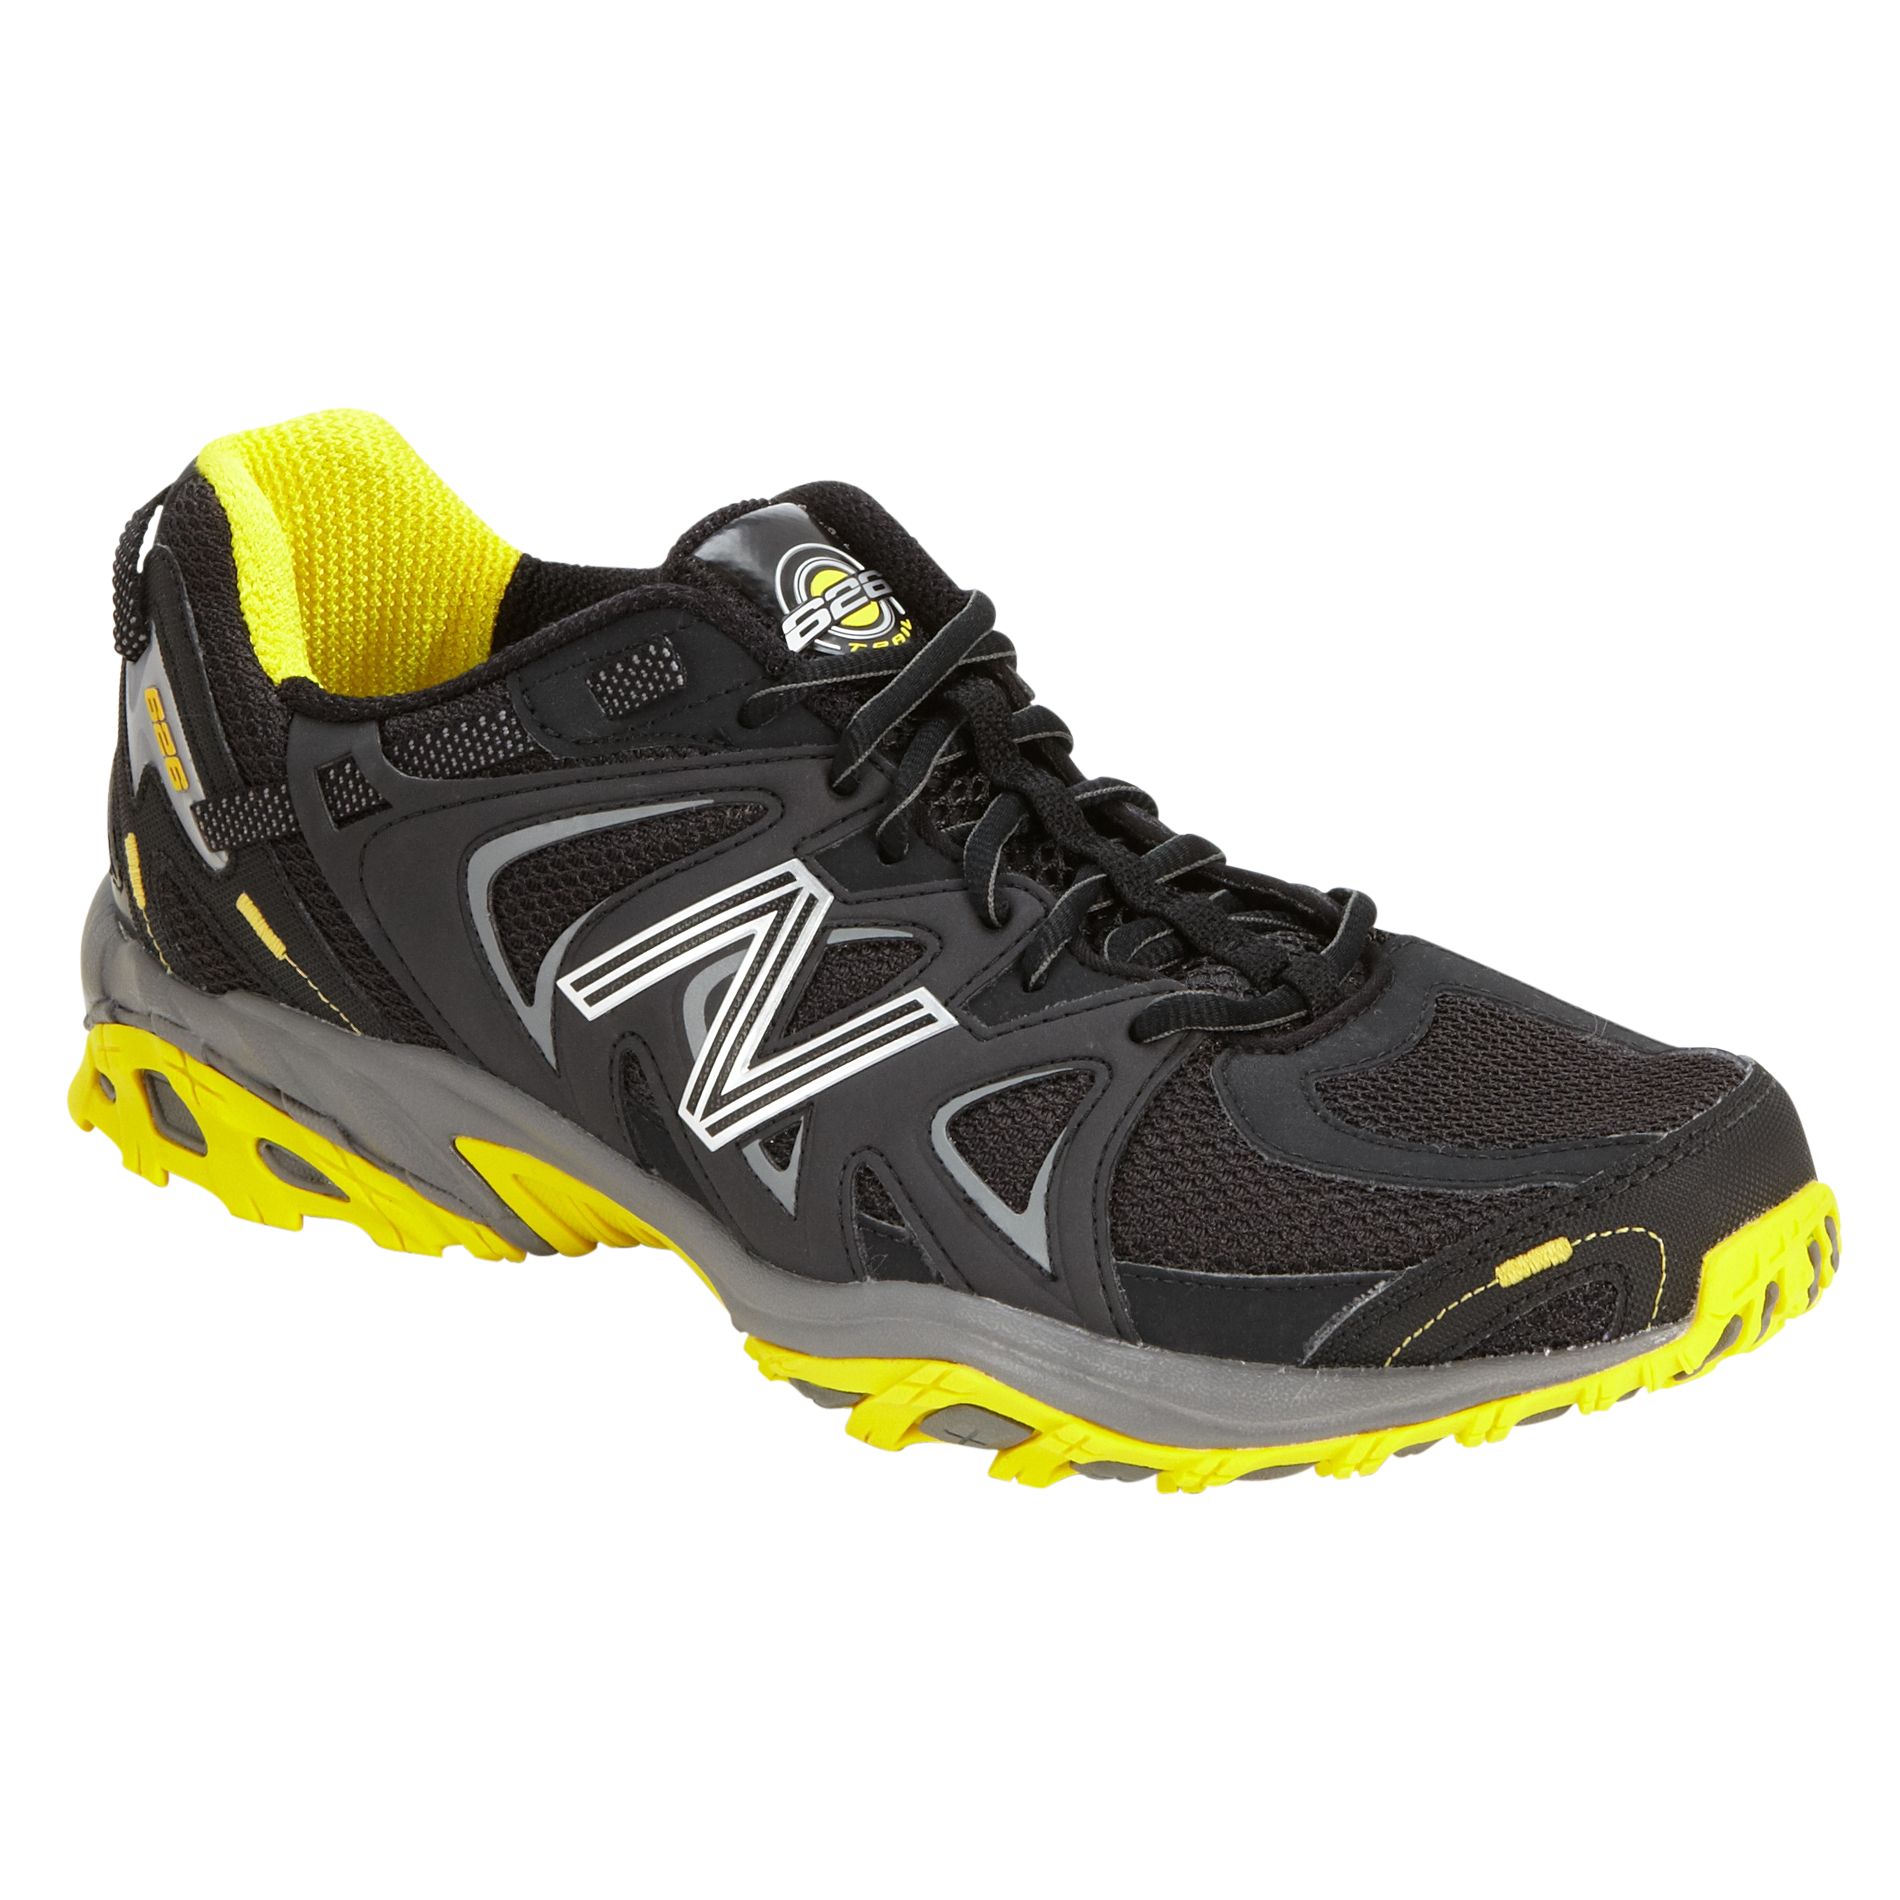 New Balance Men's 626 Trail Running Athletic Shoe - Black/Yellow